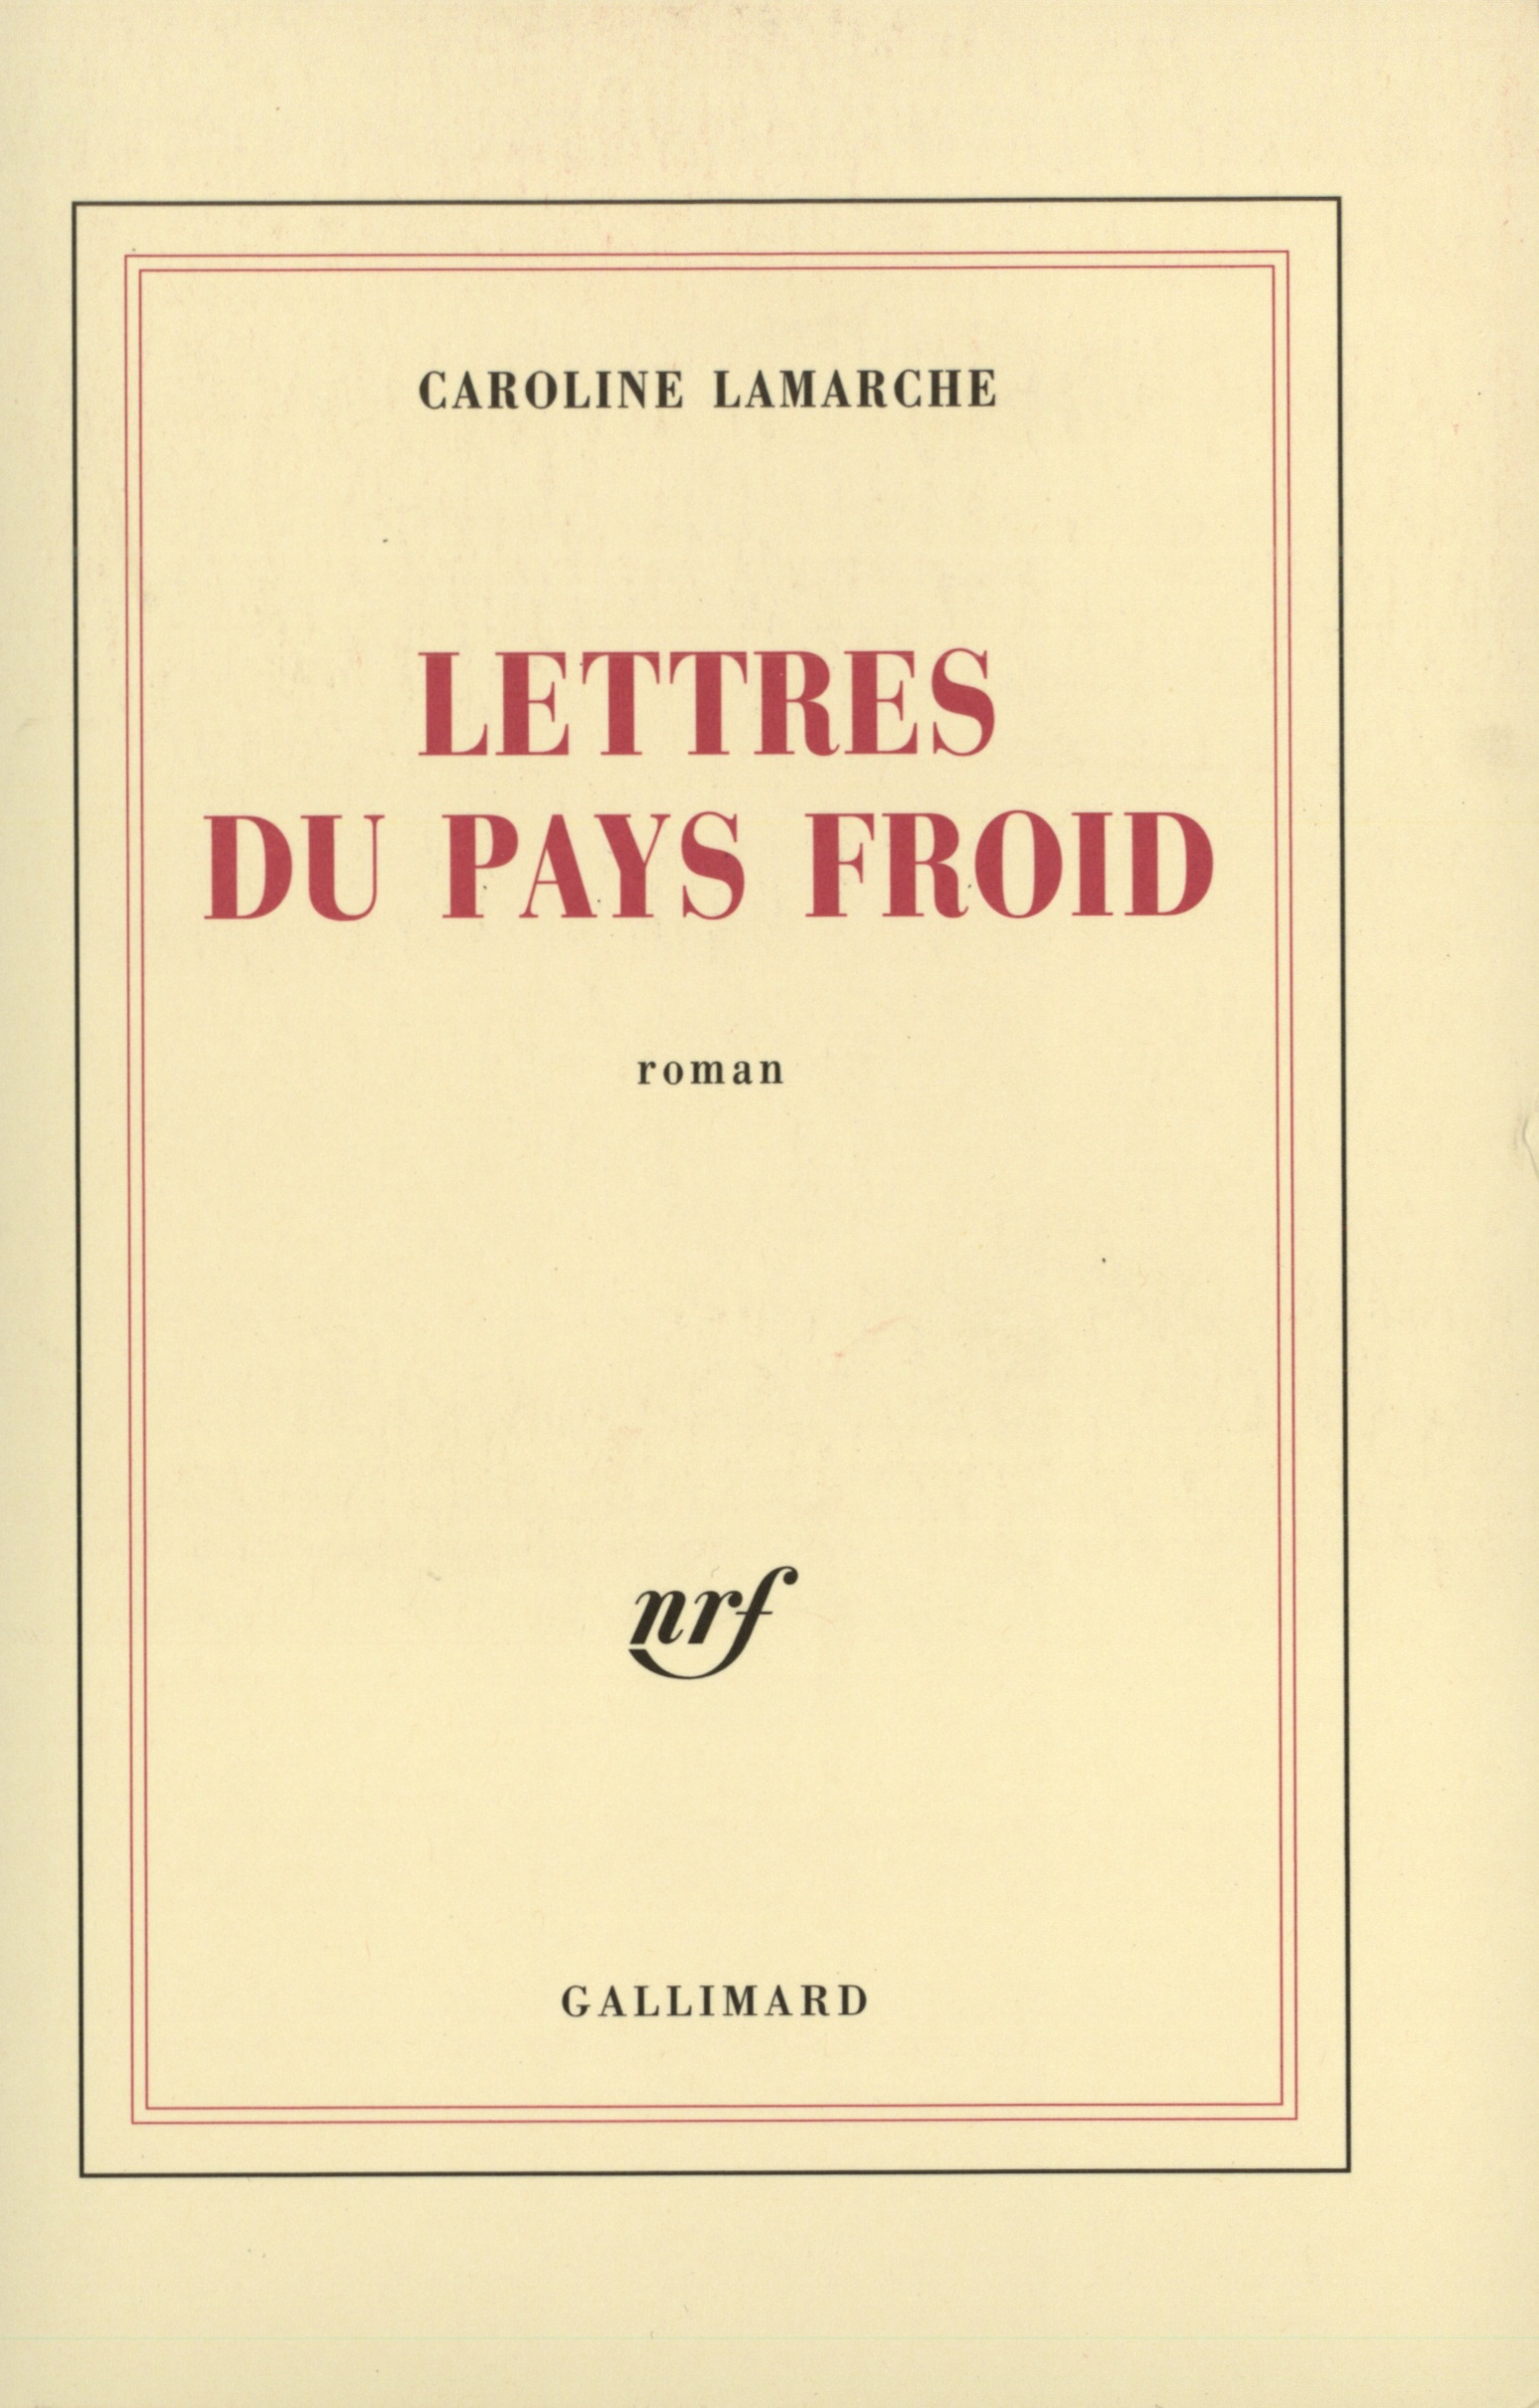 Lettres du pays froid roman (9782070765928-front-cover)